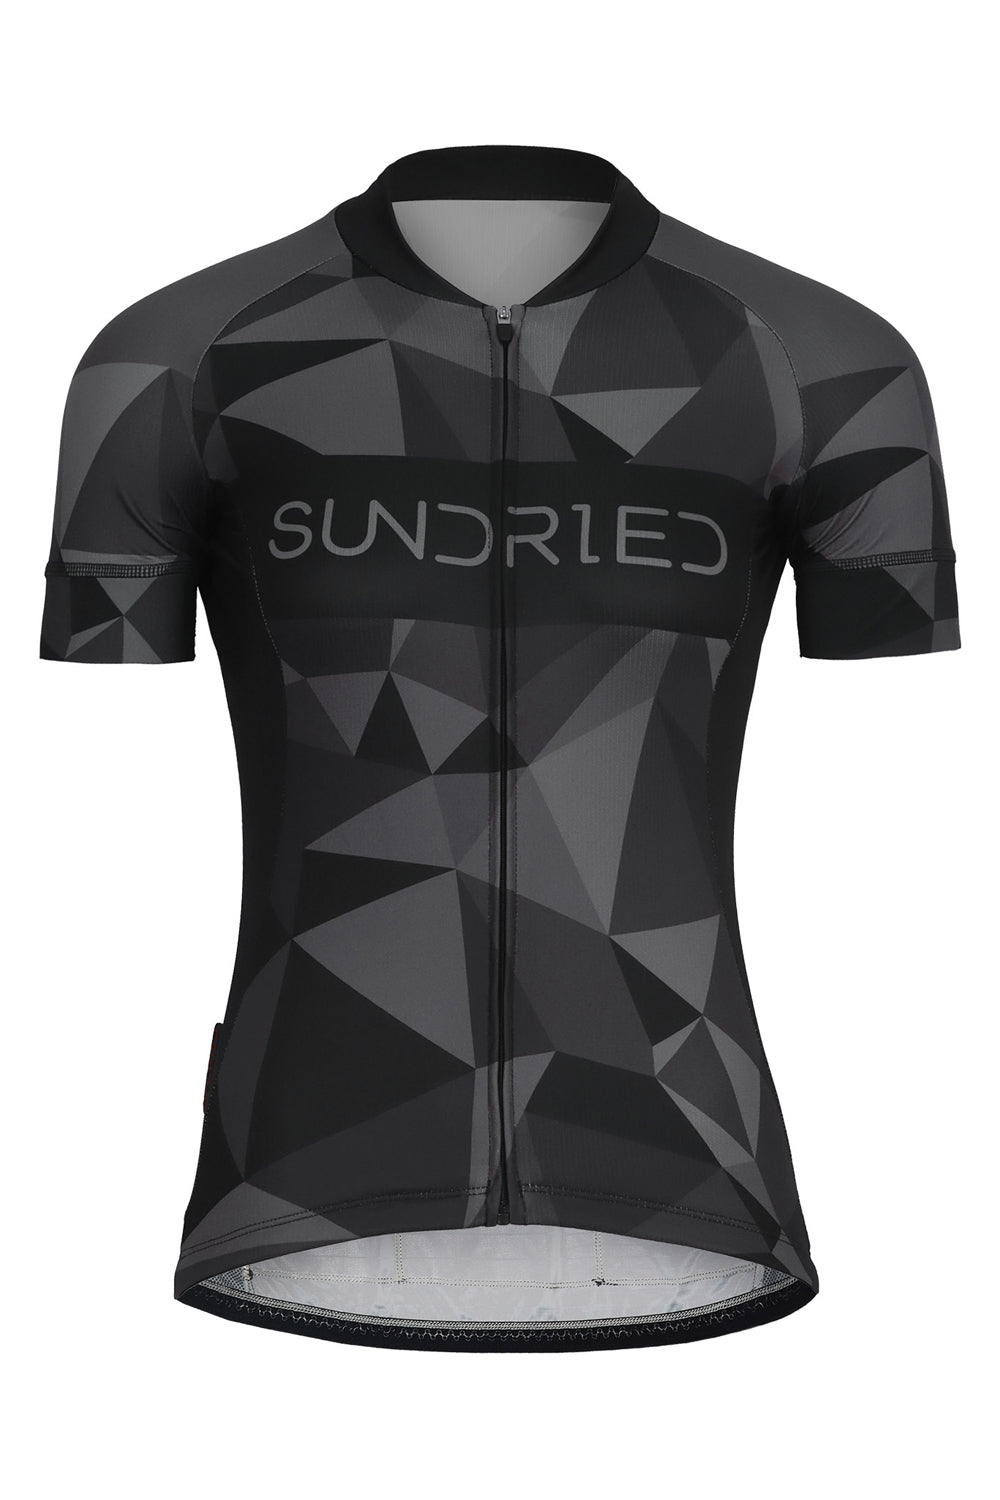 Sundried Geometric Women's Short Sleeve Training Cycle Jersey Short Sleeve Jersey S Black SD0459 S Black Activewear